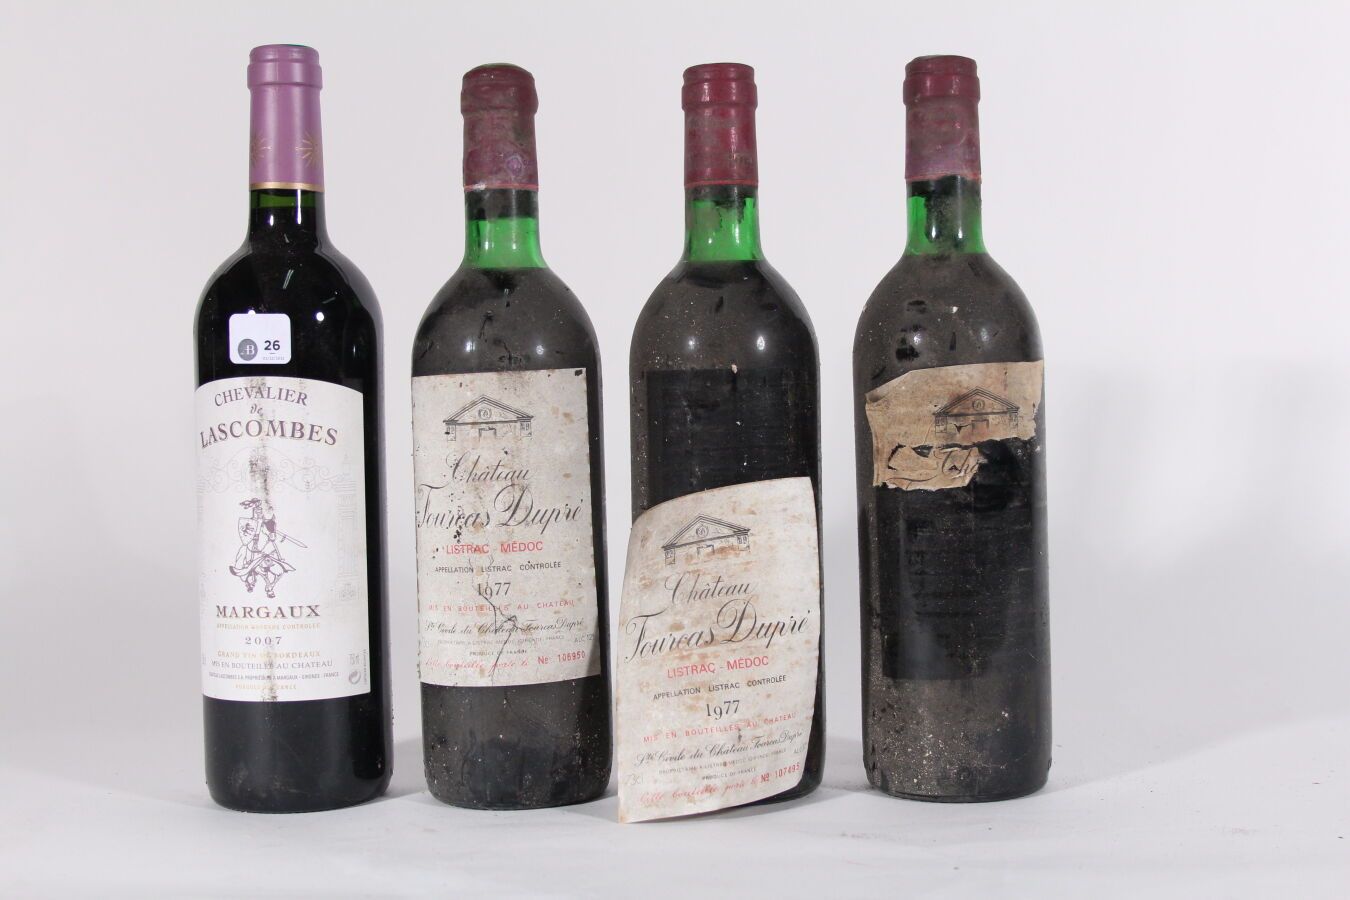 Null 2007年--拉斯科姆骑士（Chevalier de Lascombes
玛歌红葡萄酒 - 1瓶 
1977年--富尔卡-杜普雷酒庄
Listrac-&hellip;